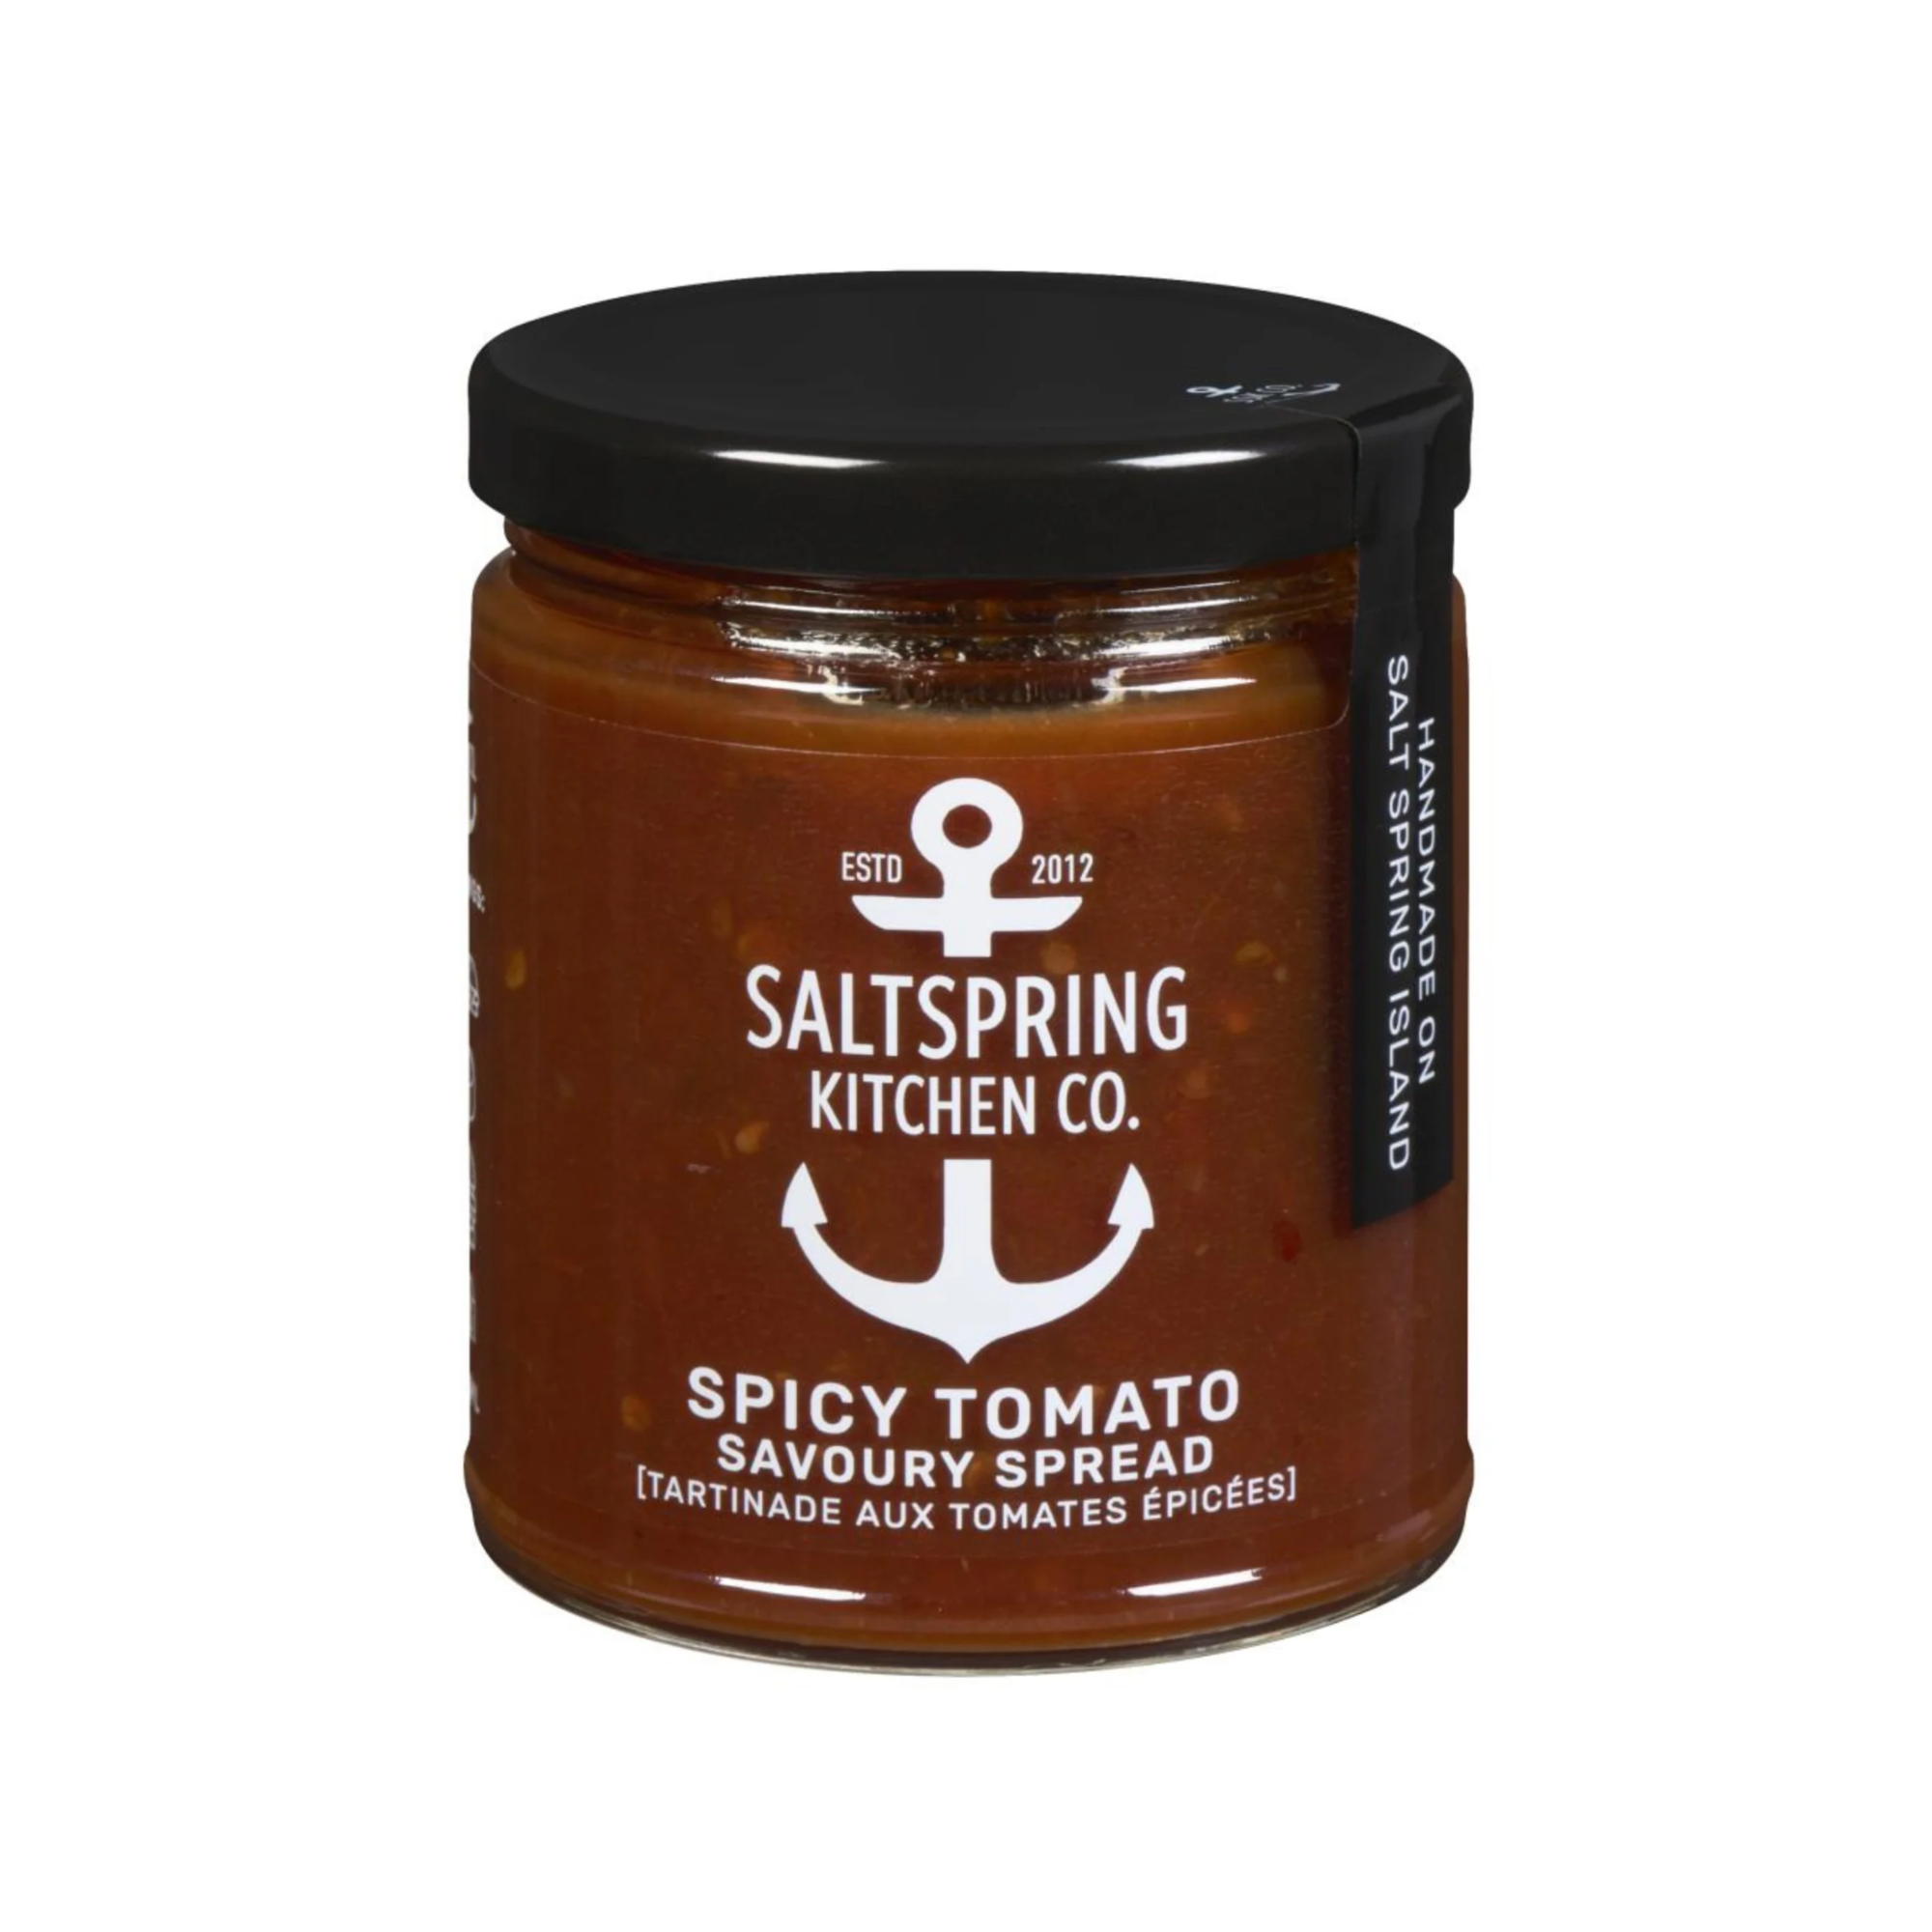 Saltspring Kitchen Co. Spicy Tomato Spread